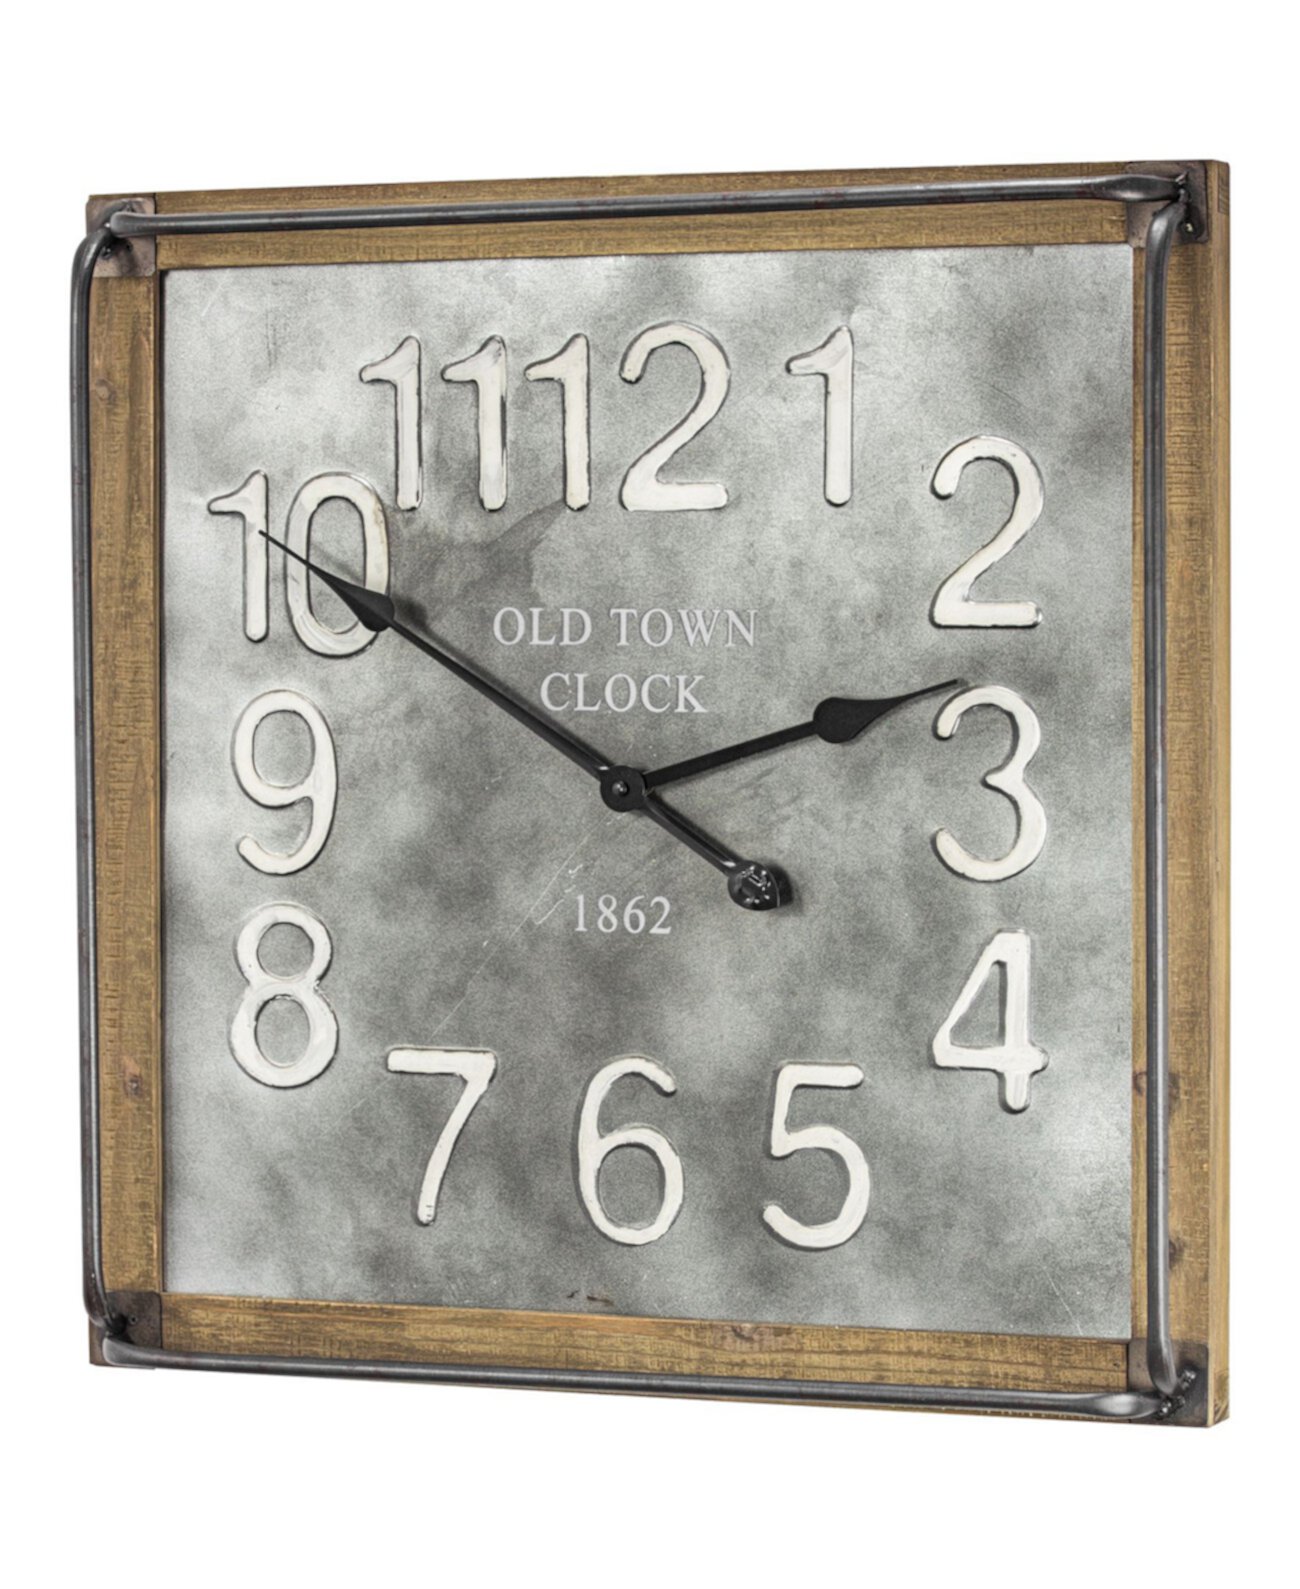 American Art Decor Old Town Clock 1862 Негабаритные подвесные настенные часы Crystal Art Gallery